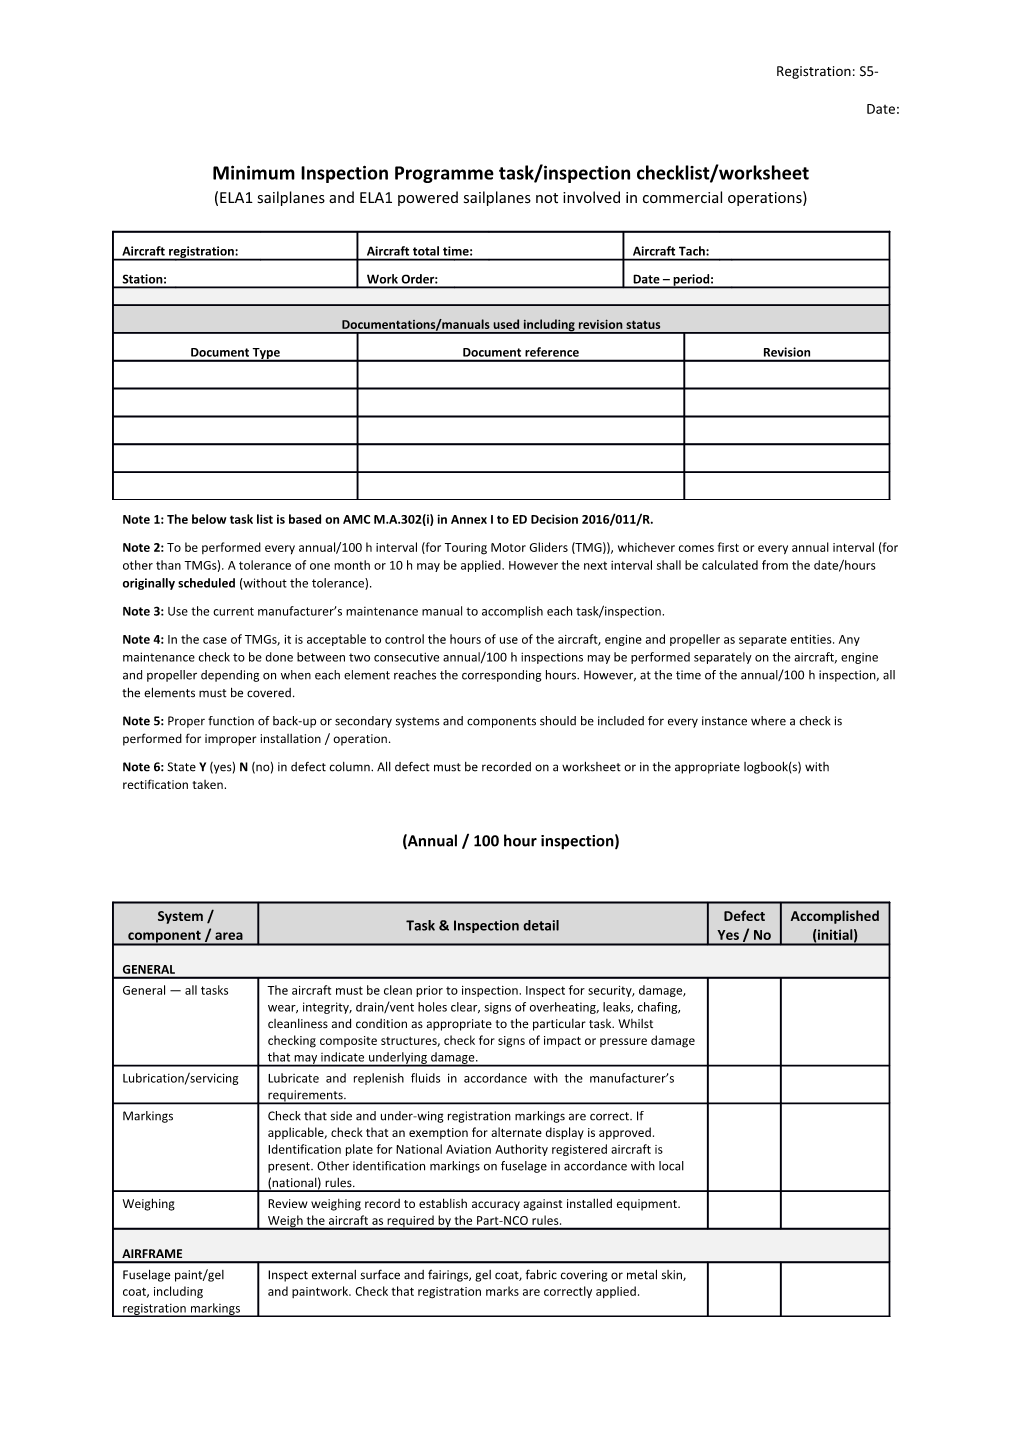 Minimum Inspection Programme Task/Inspection Checklist/Worksheet